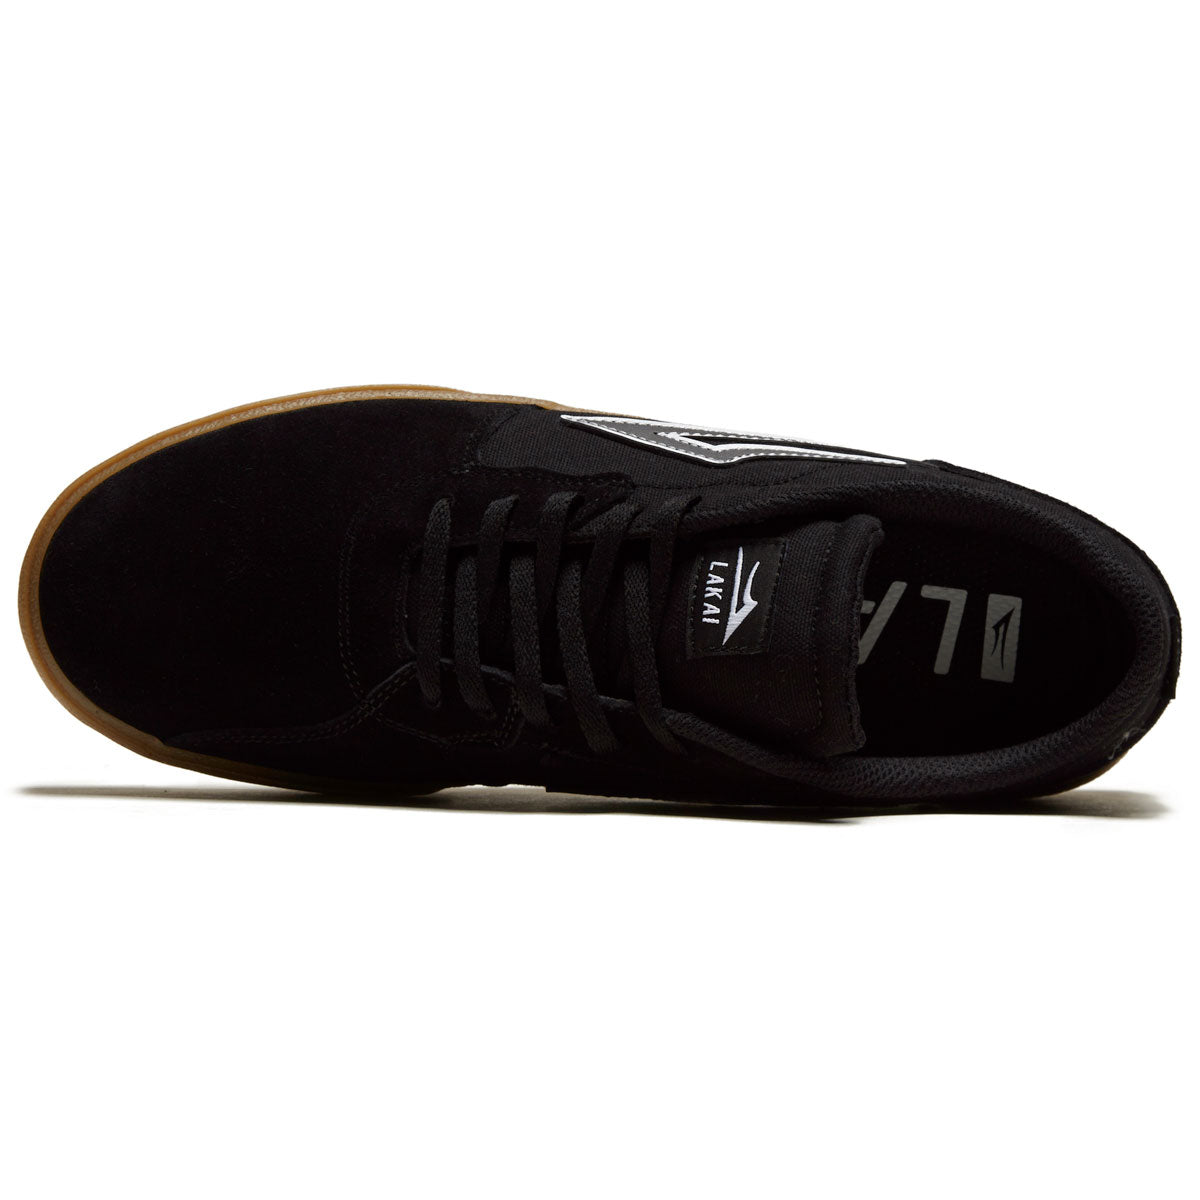 Lakai Cardiff Shoes - Black/Gum Suede image 3